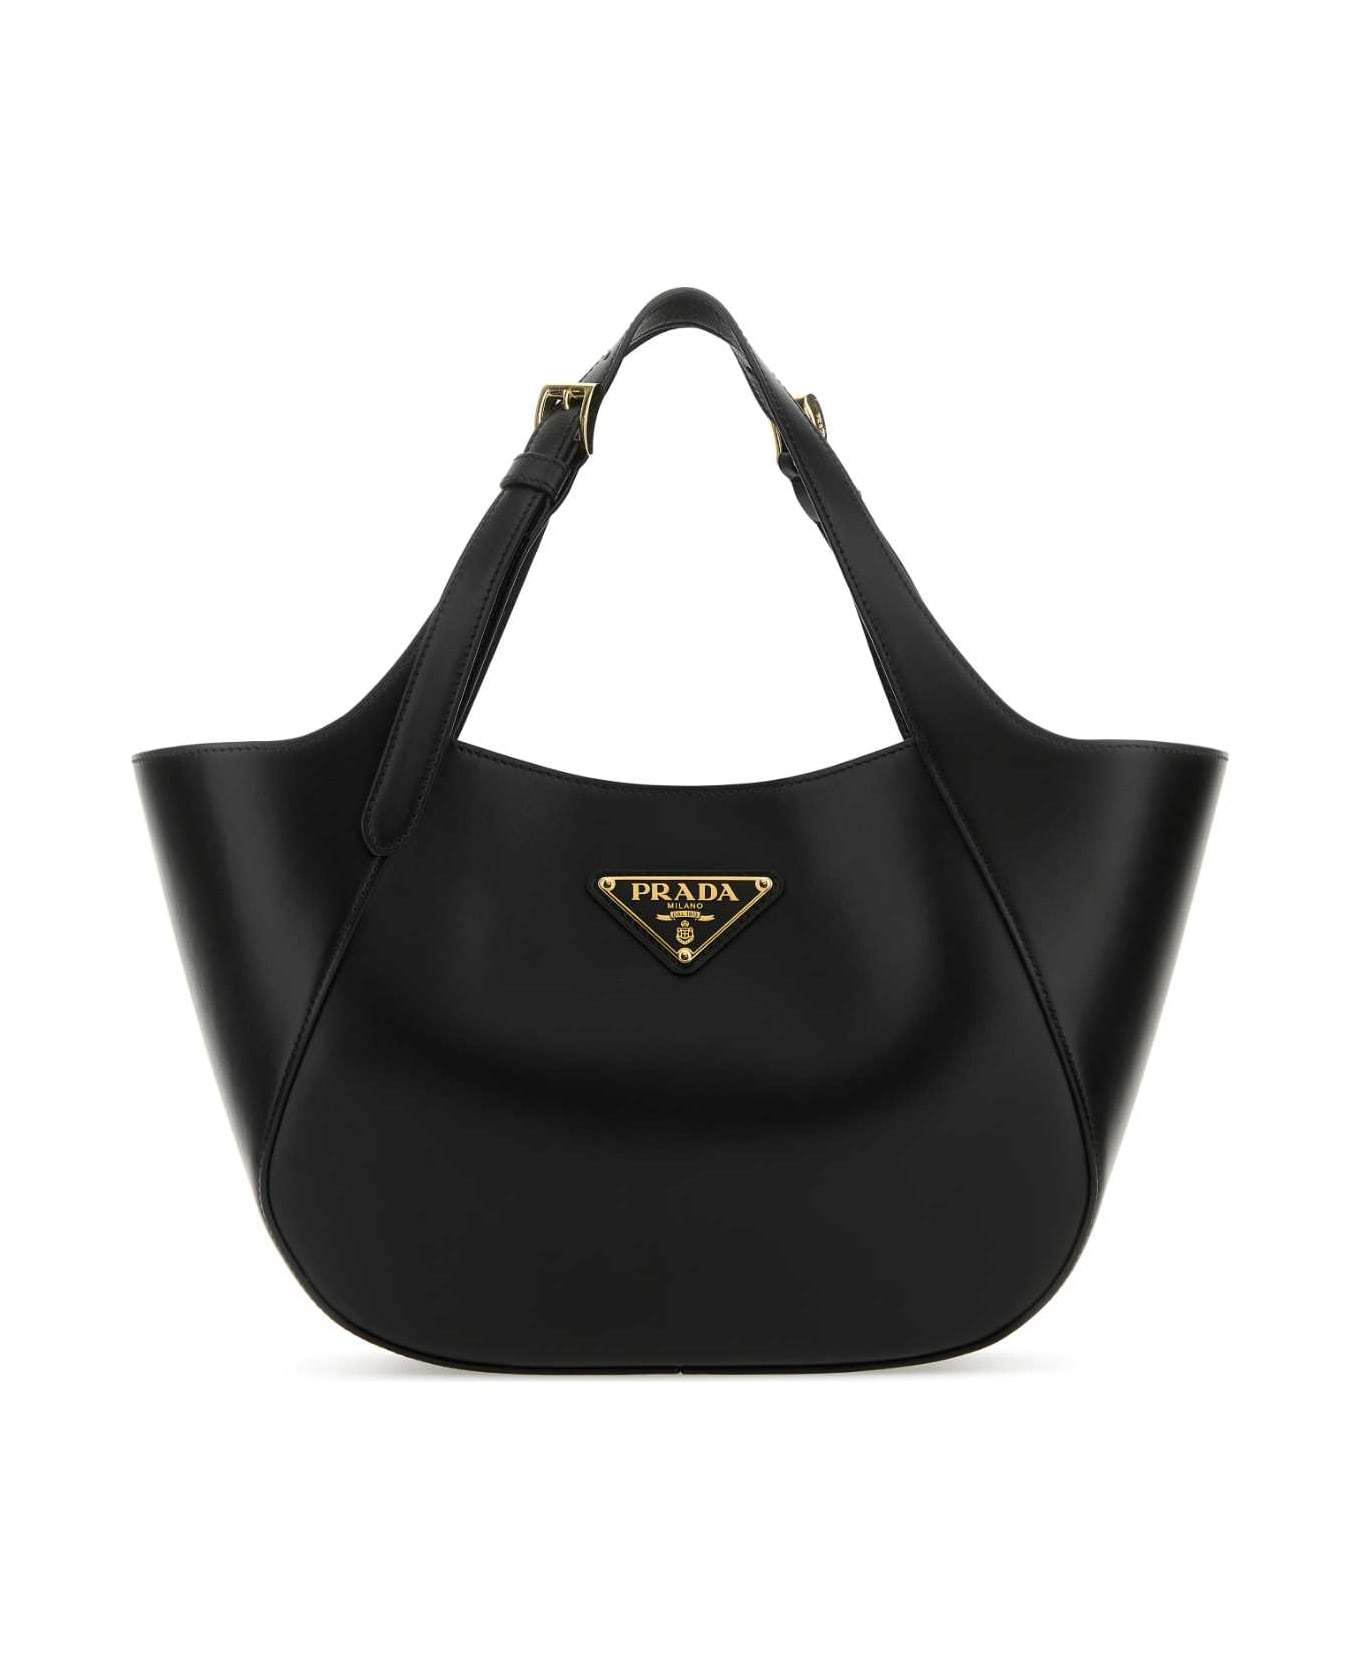 Prada Black Leather Handbag - NERO